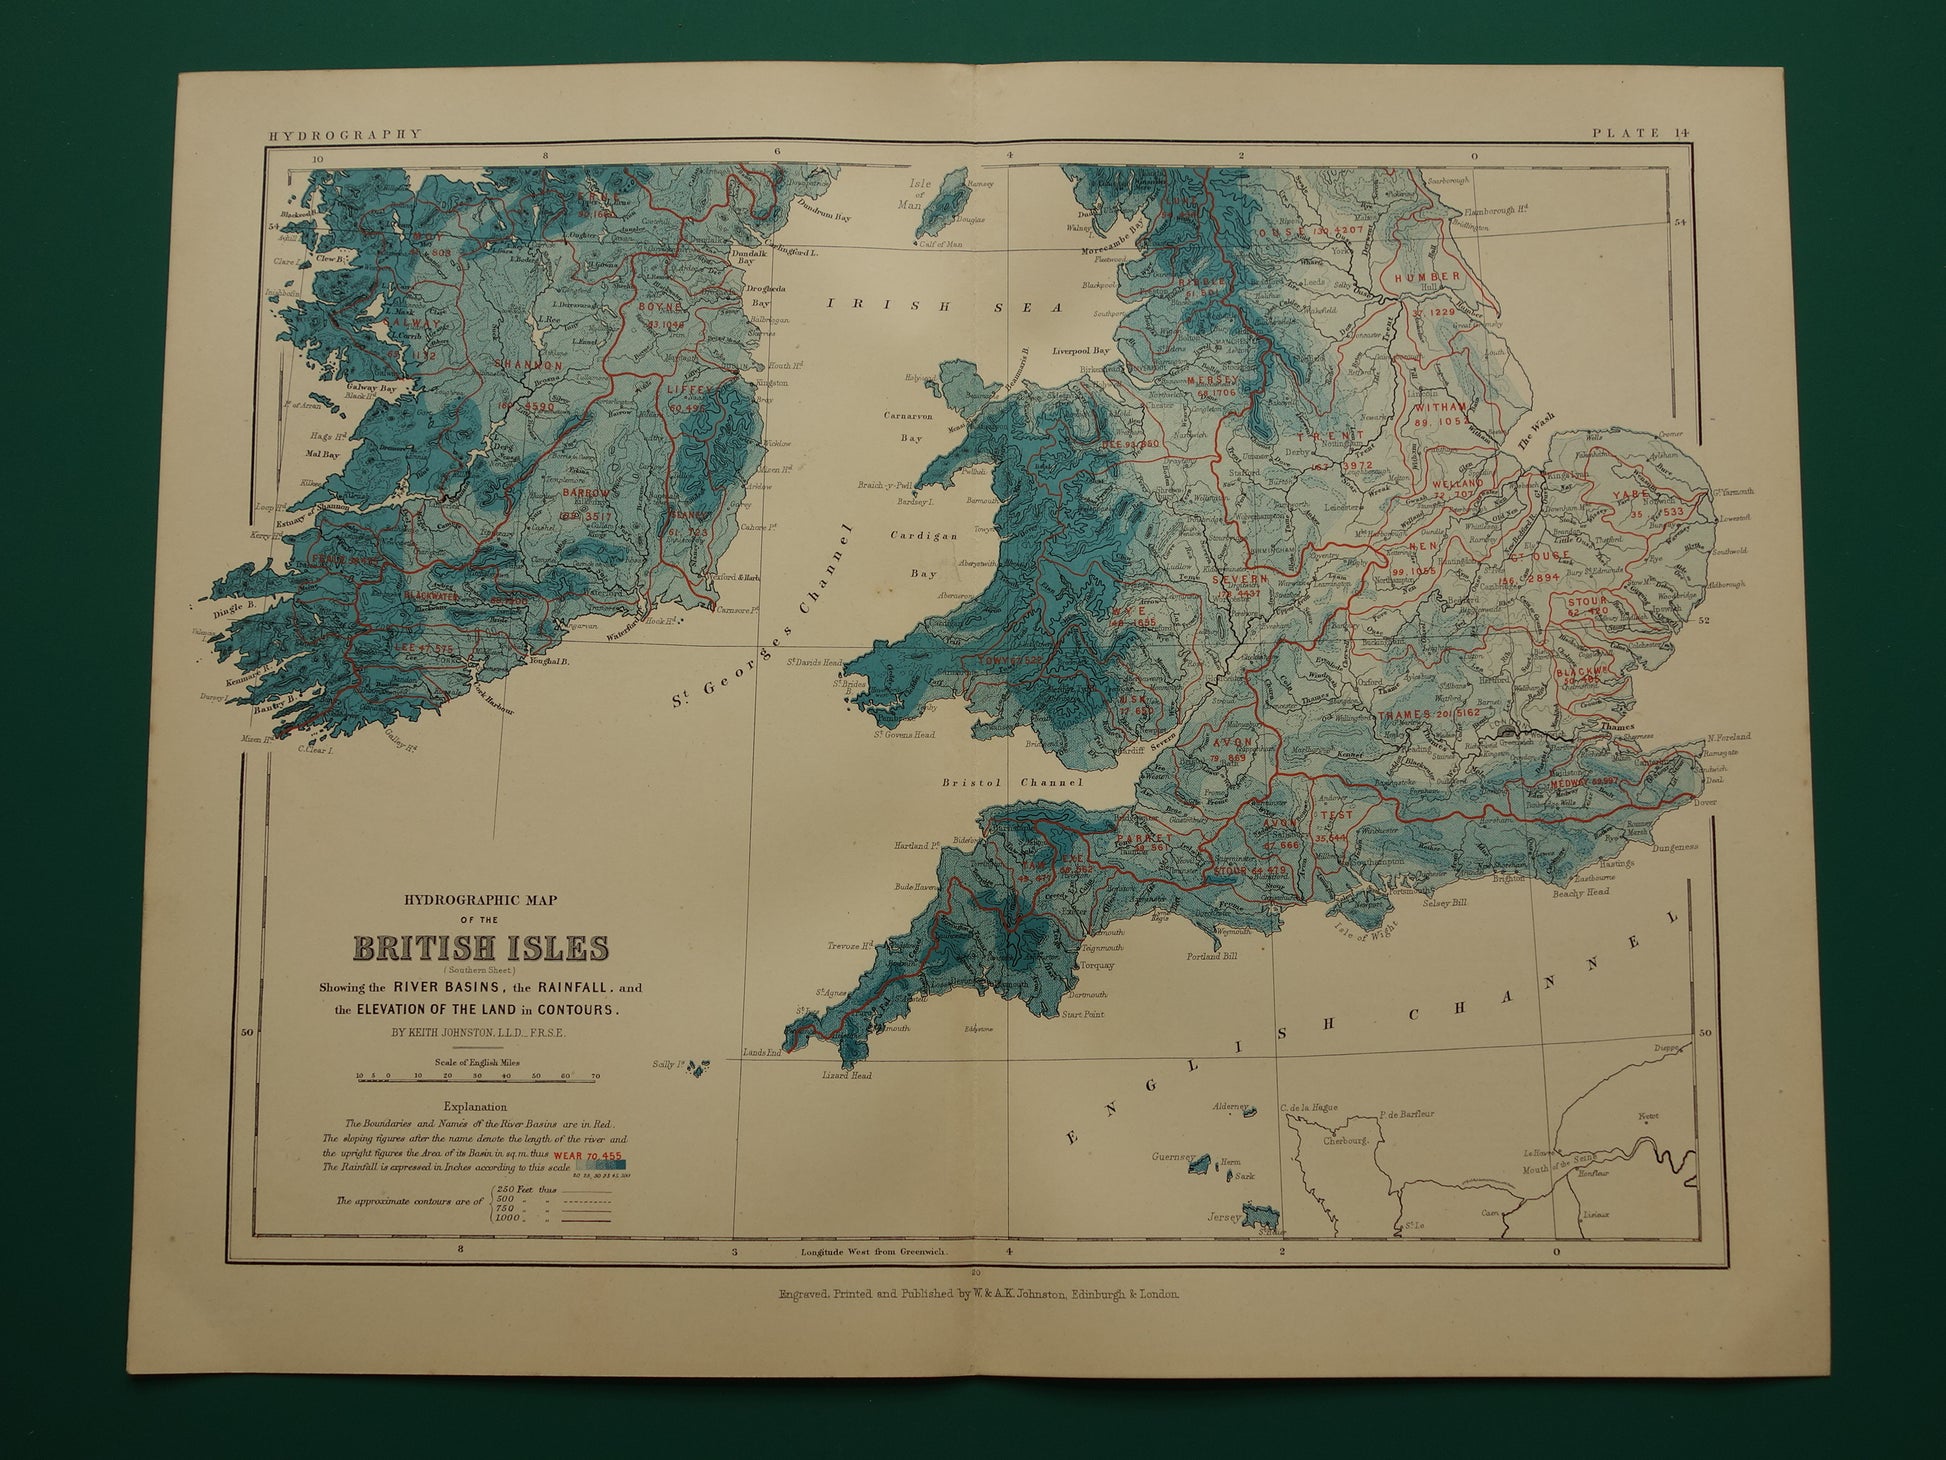  Hydrographic map of the British Isles Johnston 1879